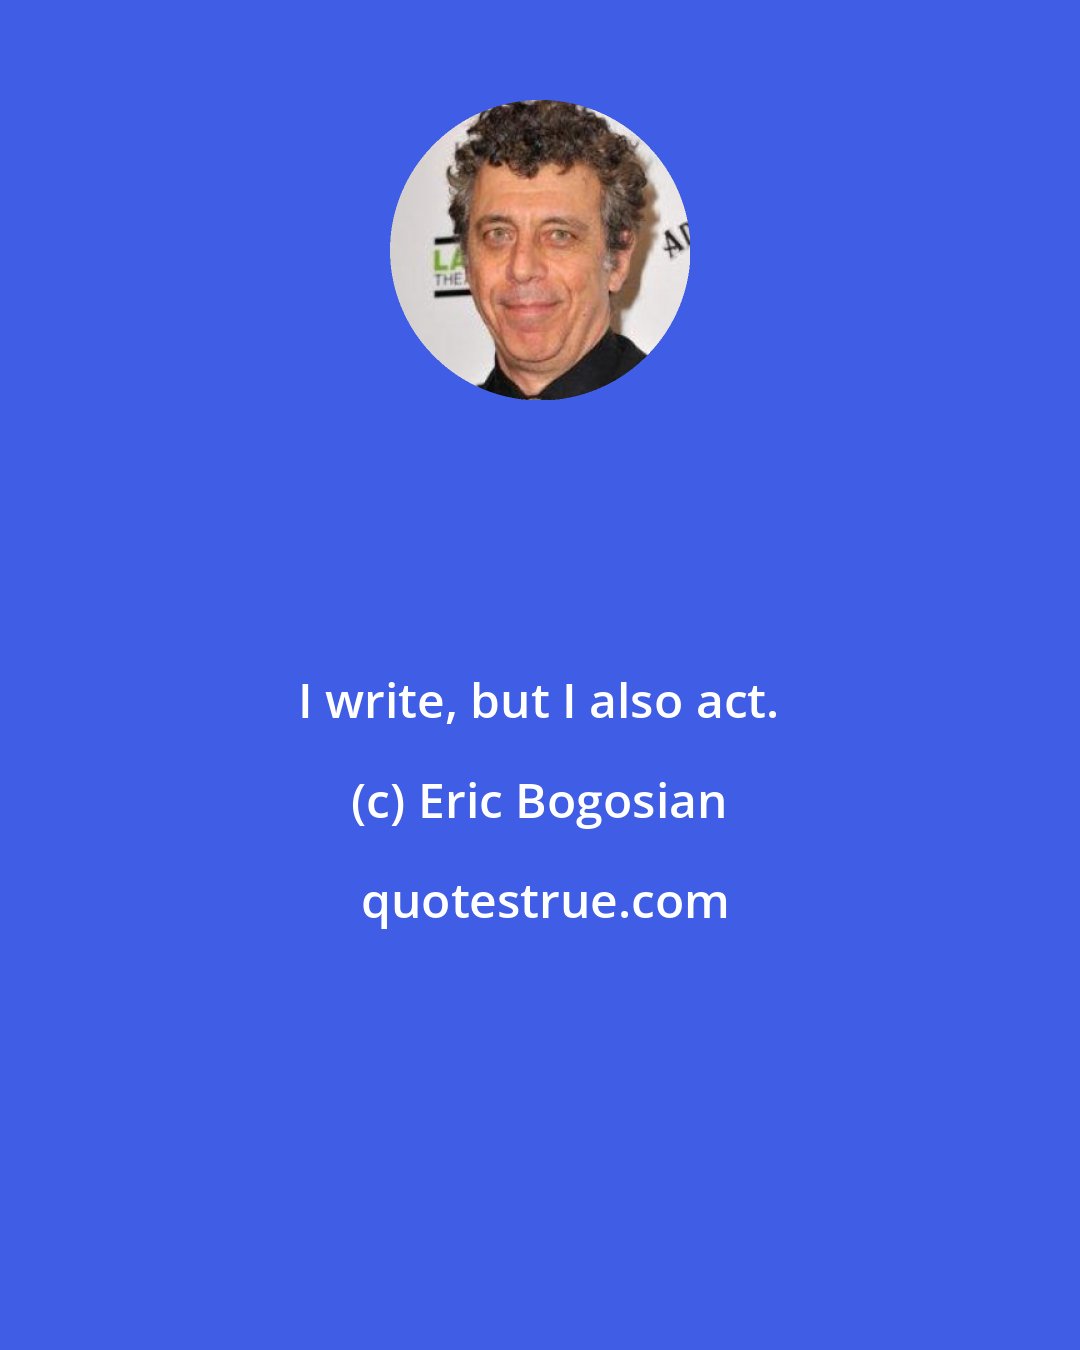 Eric Bogosian: I write, but I also act.